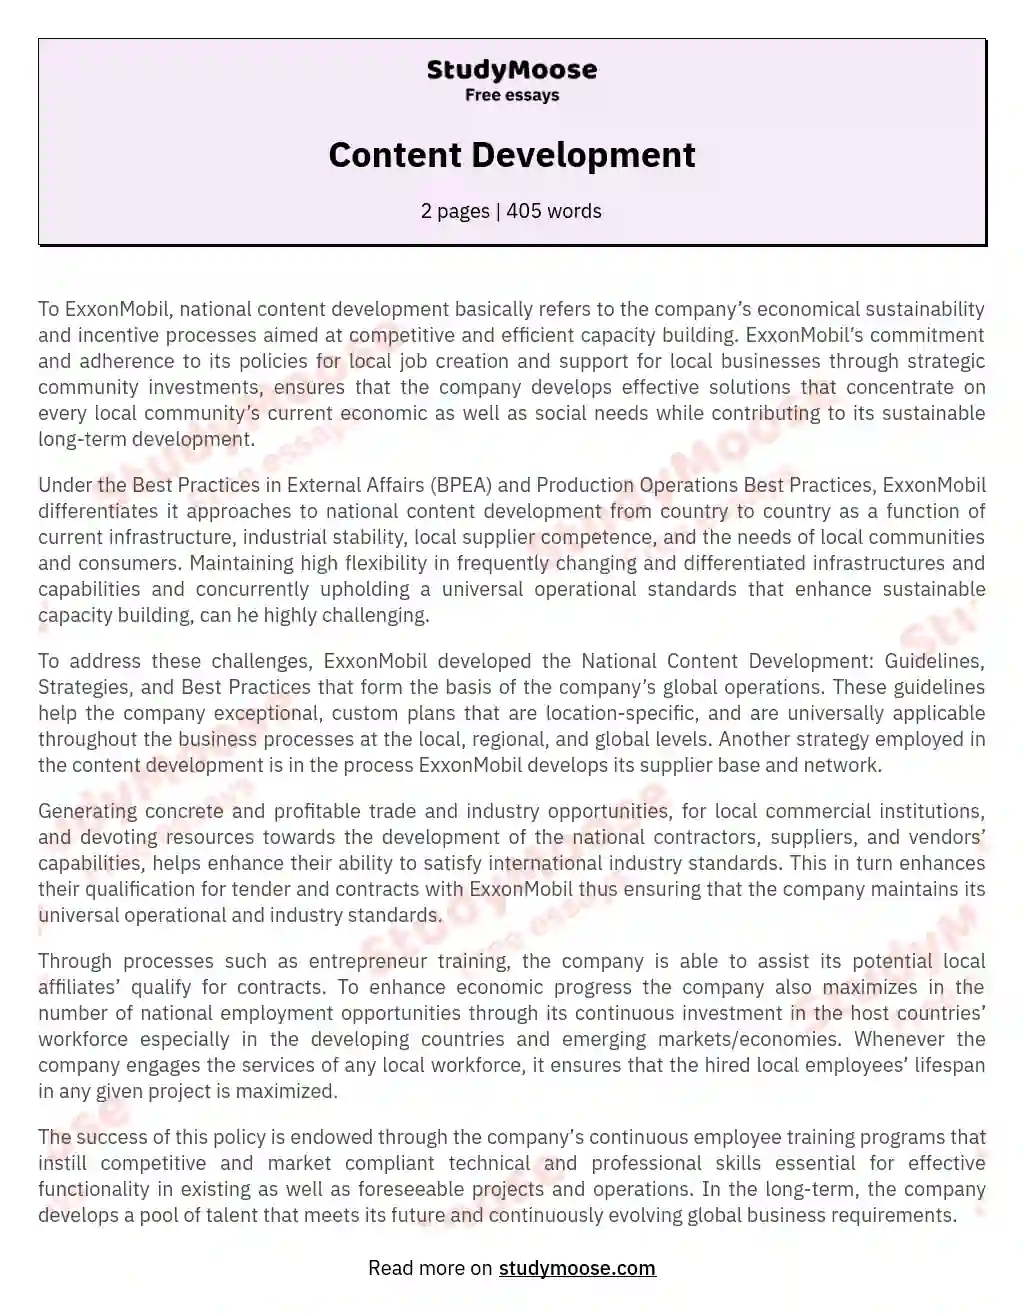 Content Development essay